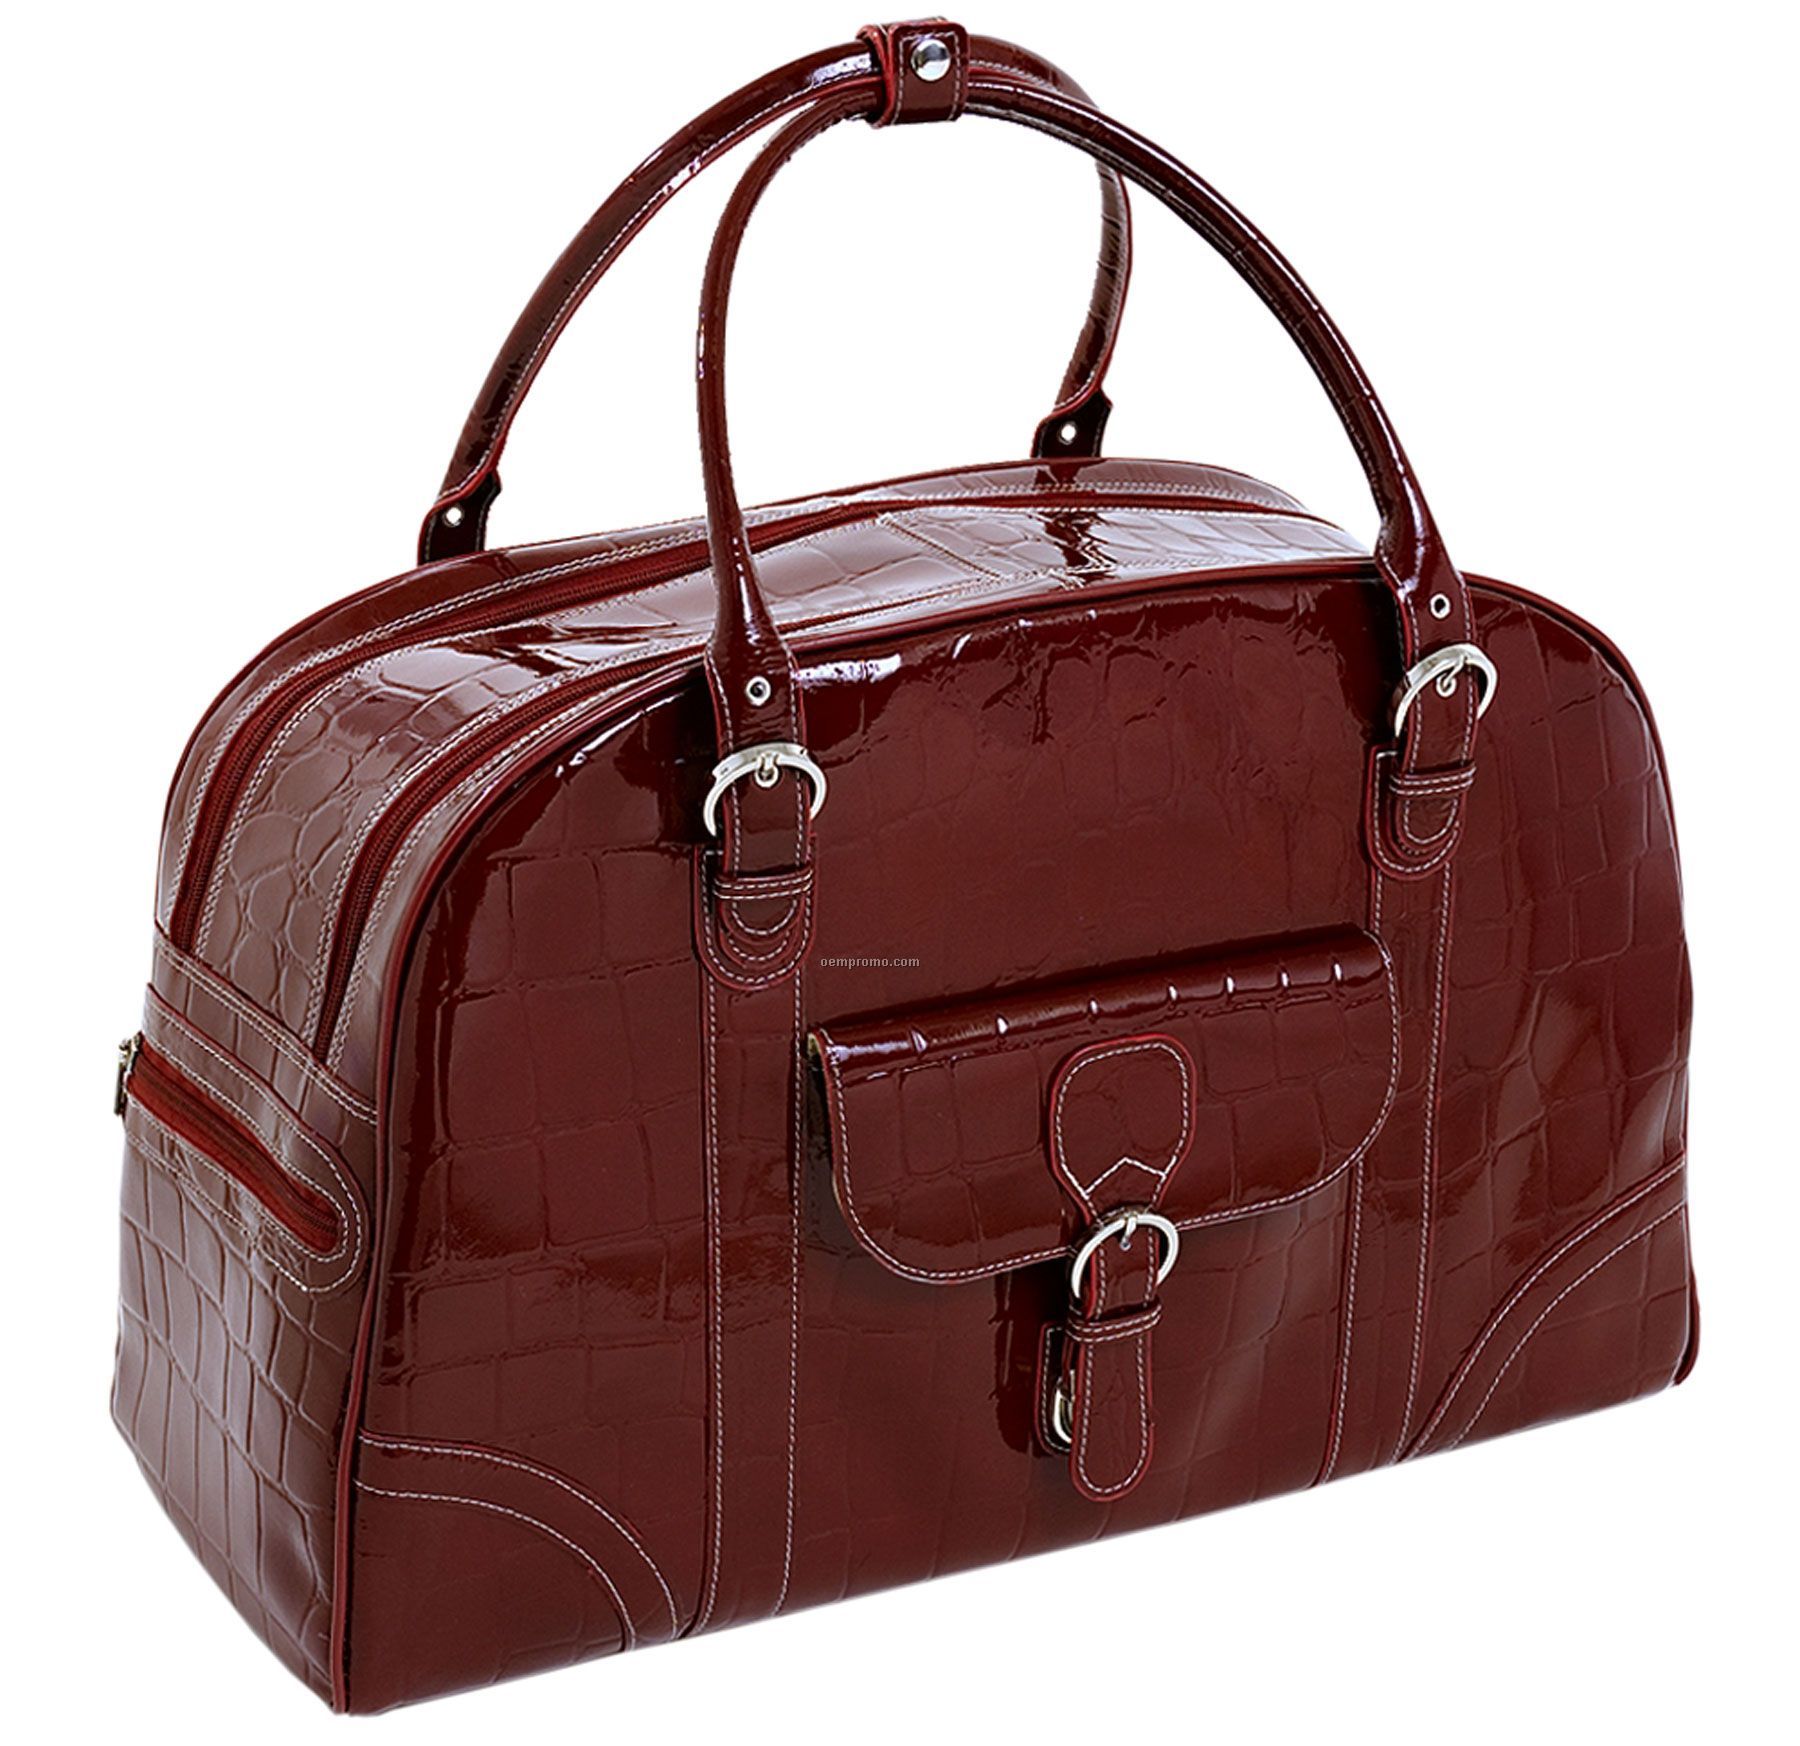 Buranco, Leather Ladies' Duffel Bag - Cherry Red